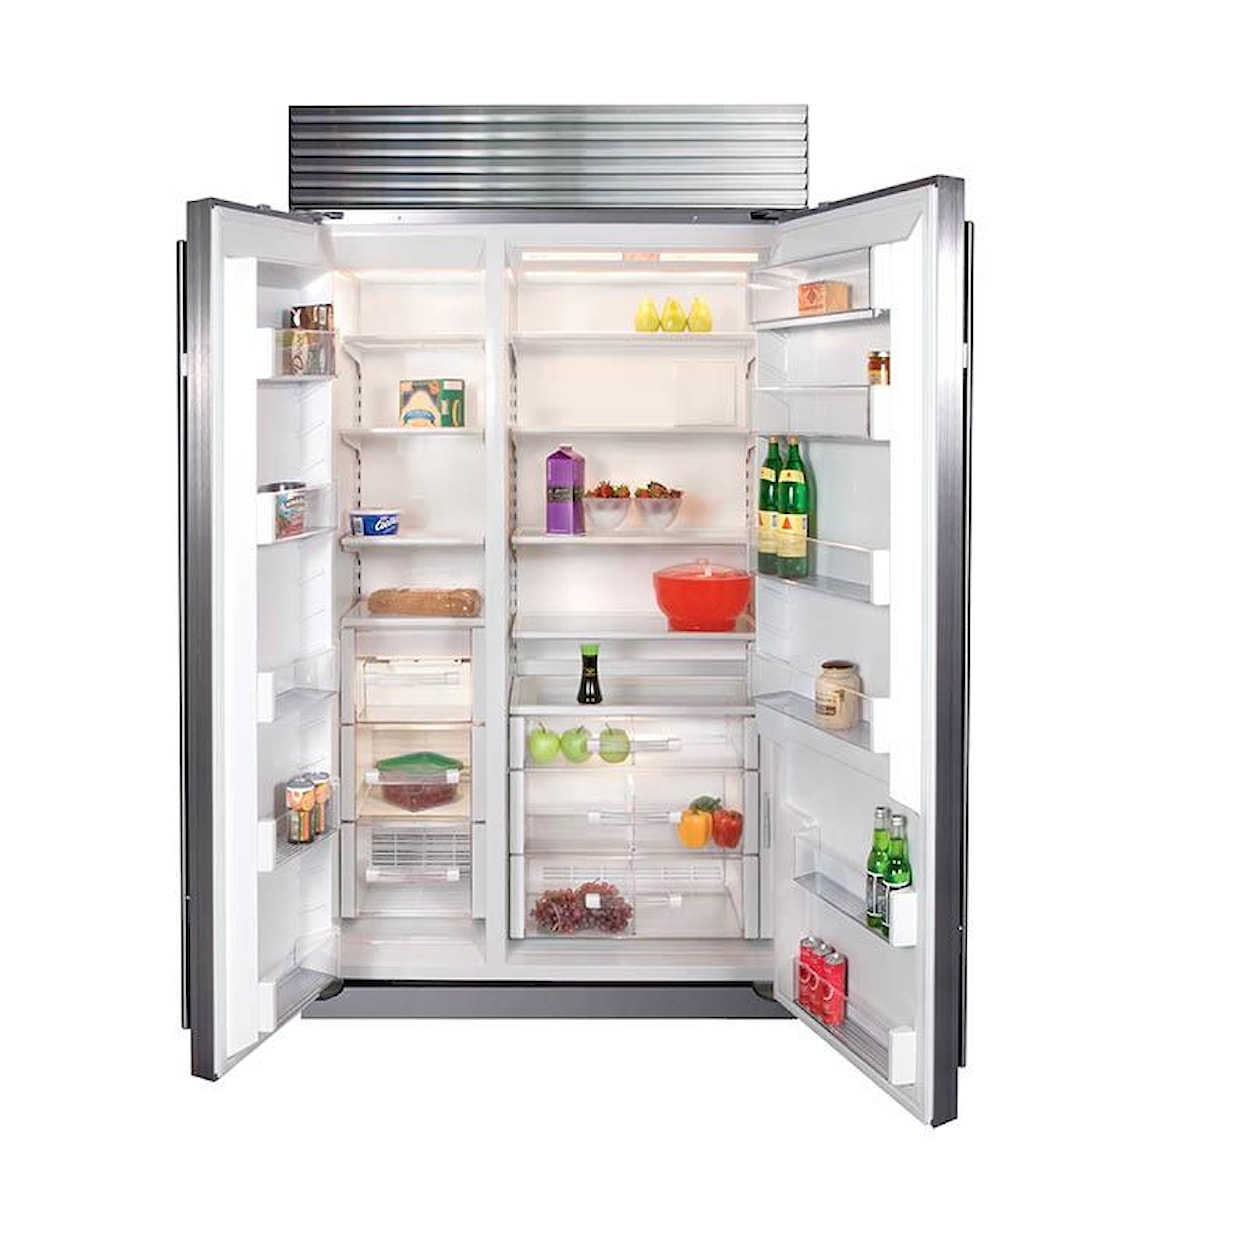 Sub-Zero Built-In Refrigerators 24 Cu. Ft. Side-by-Side Refrigerator